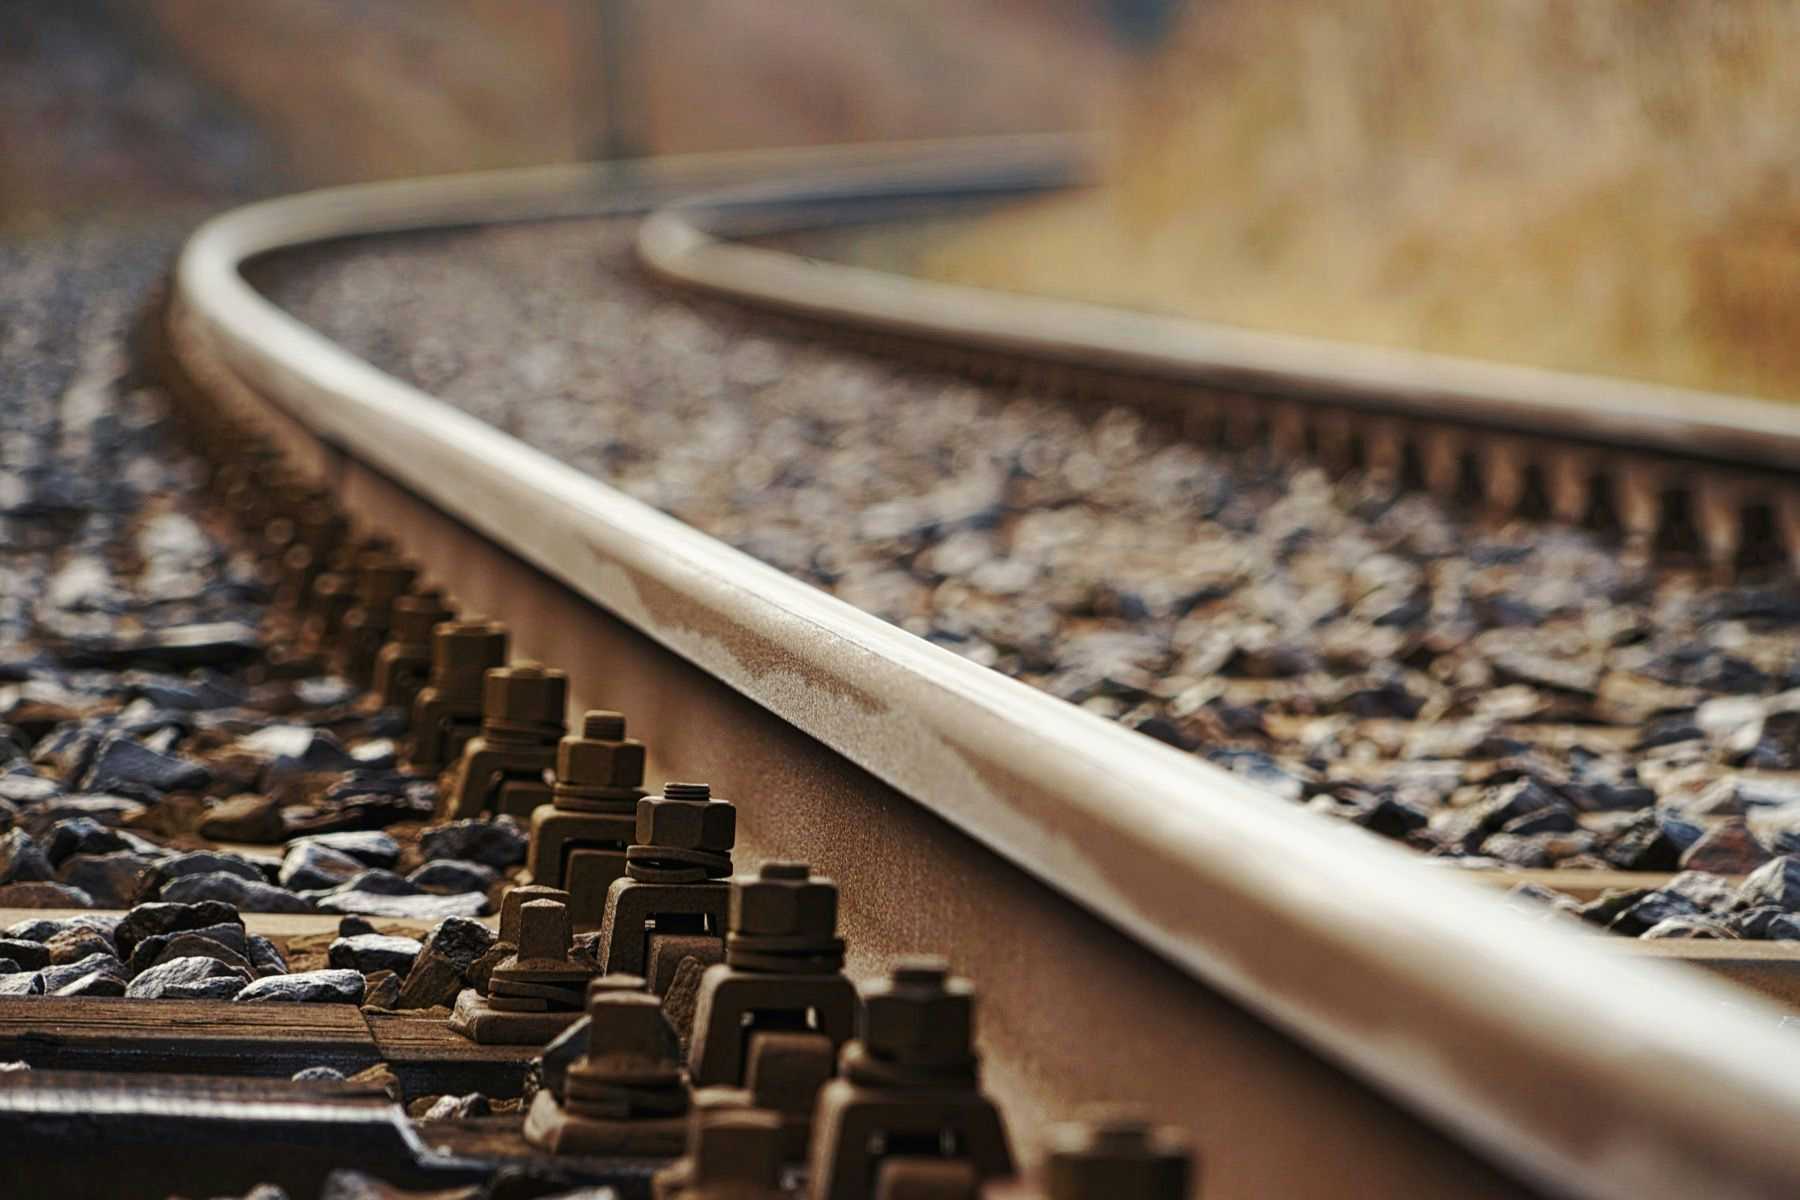 Close up of a railroad track